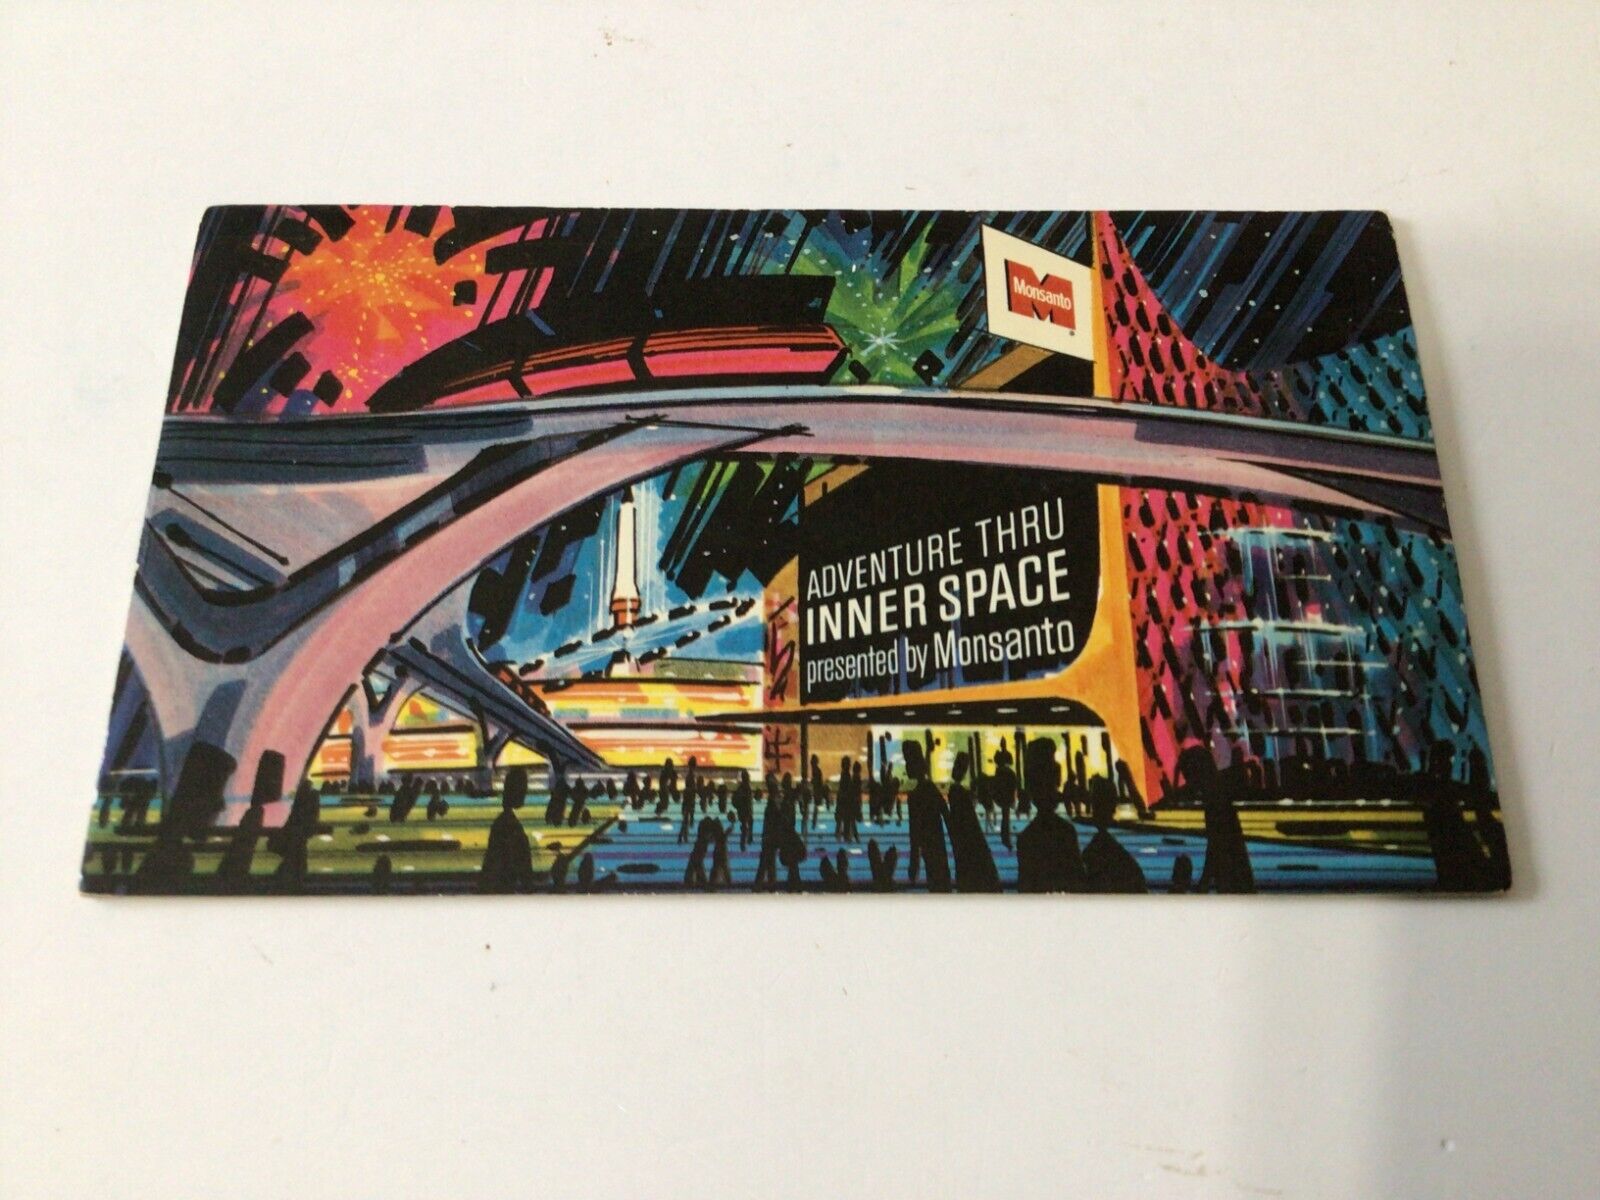 1967 Disneyland Adventure Thru Inner Space Postcard Book, Presented by Monsanto